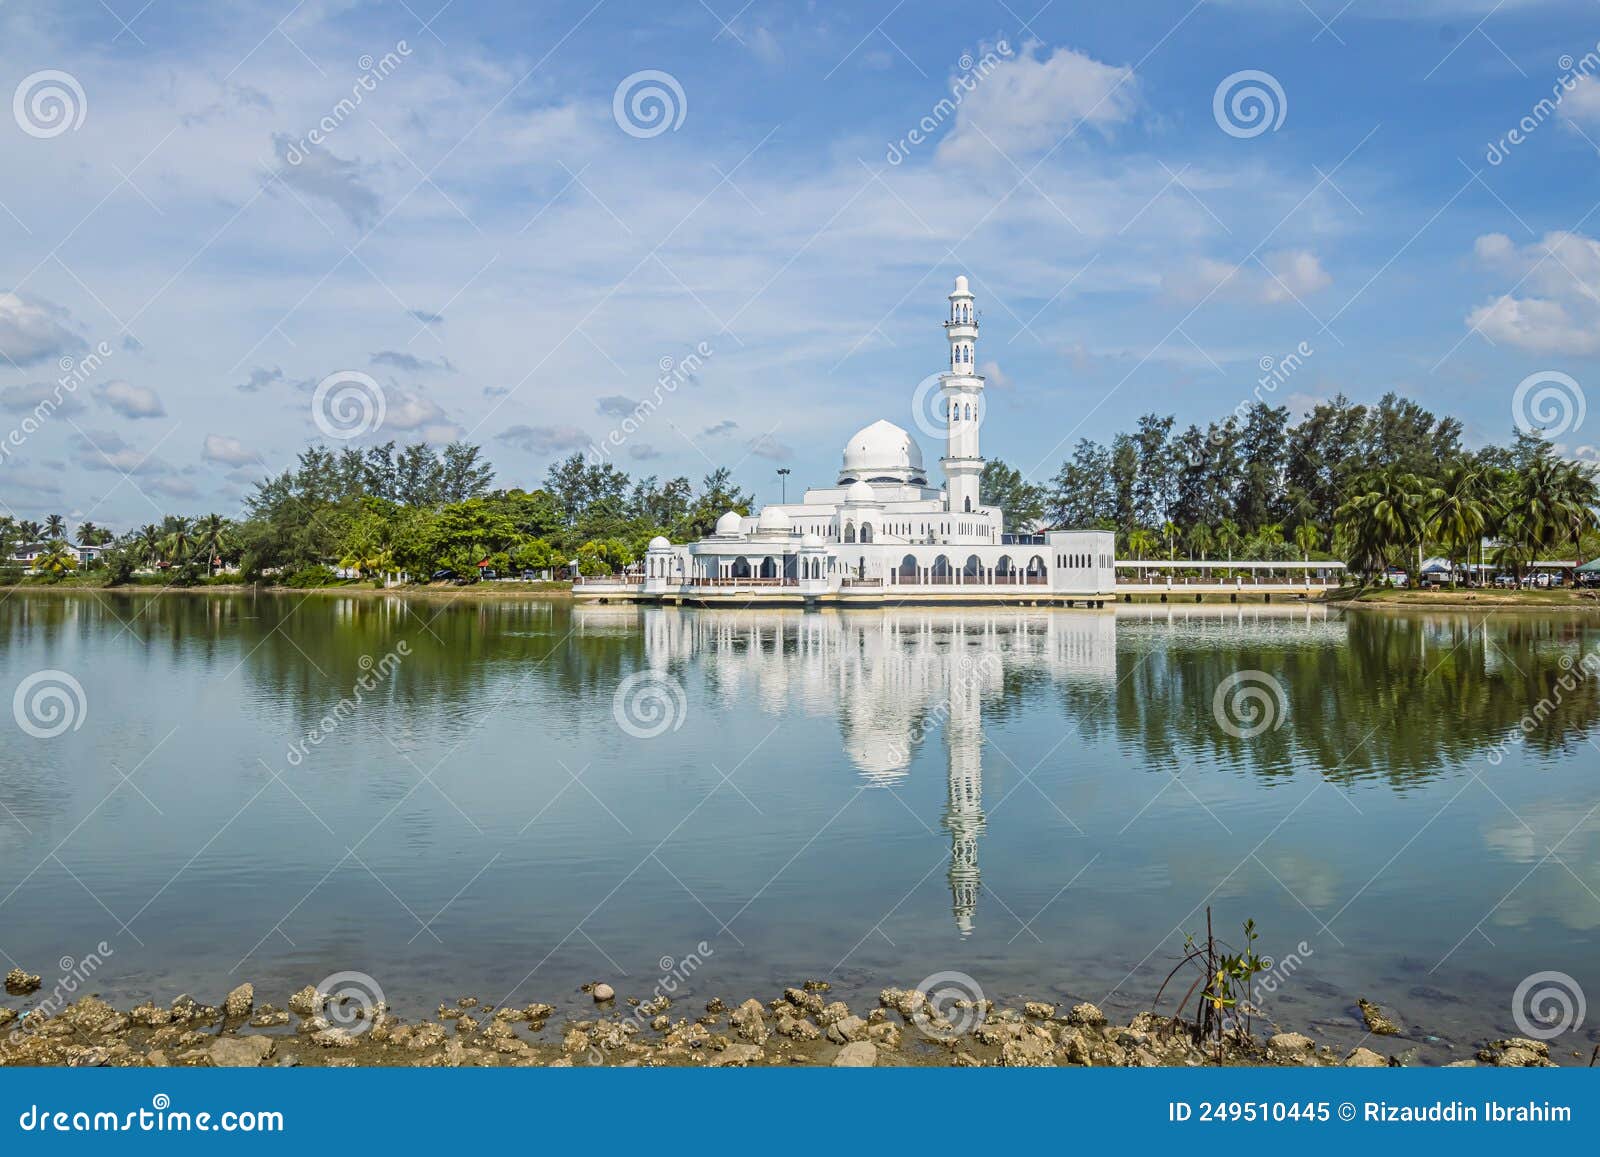 kuala ibai floating mosque or formally named as tengku tengah zaharah mosque and it`s reflection in water at terengganu, malaysia.